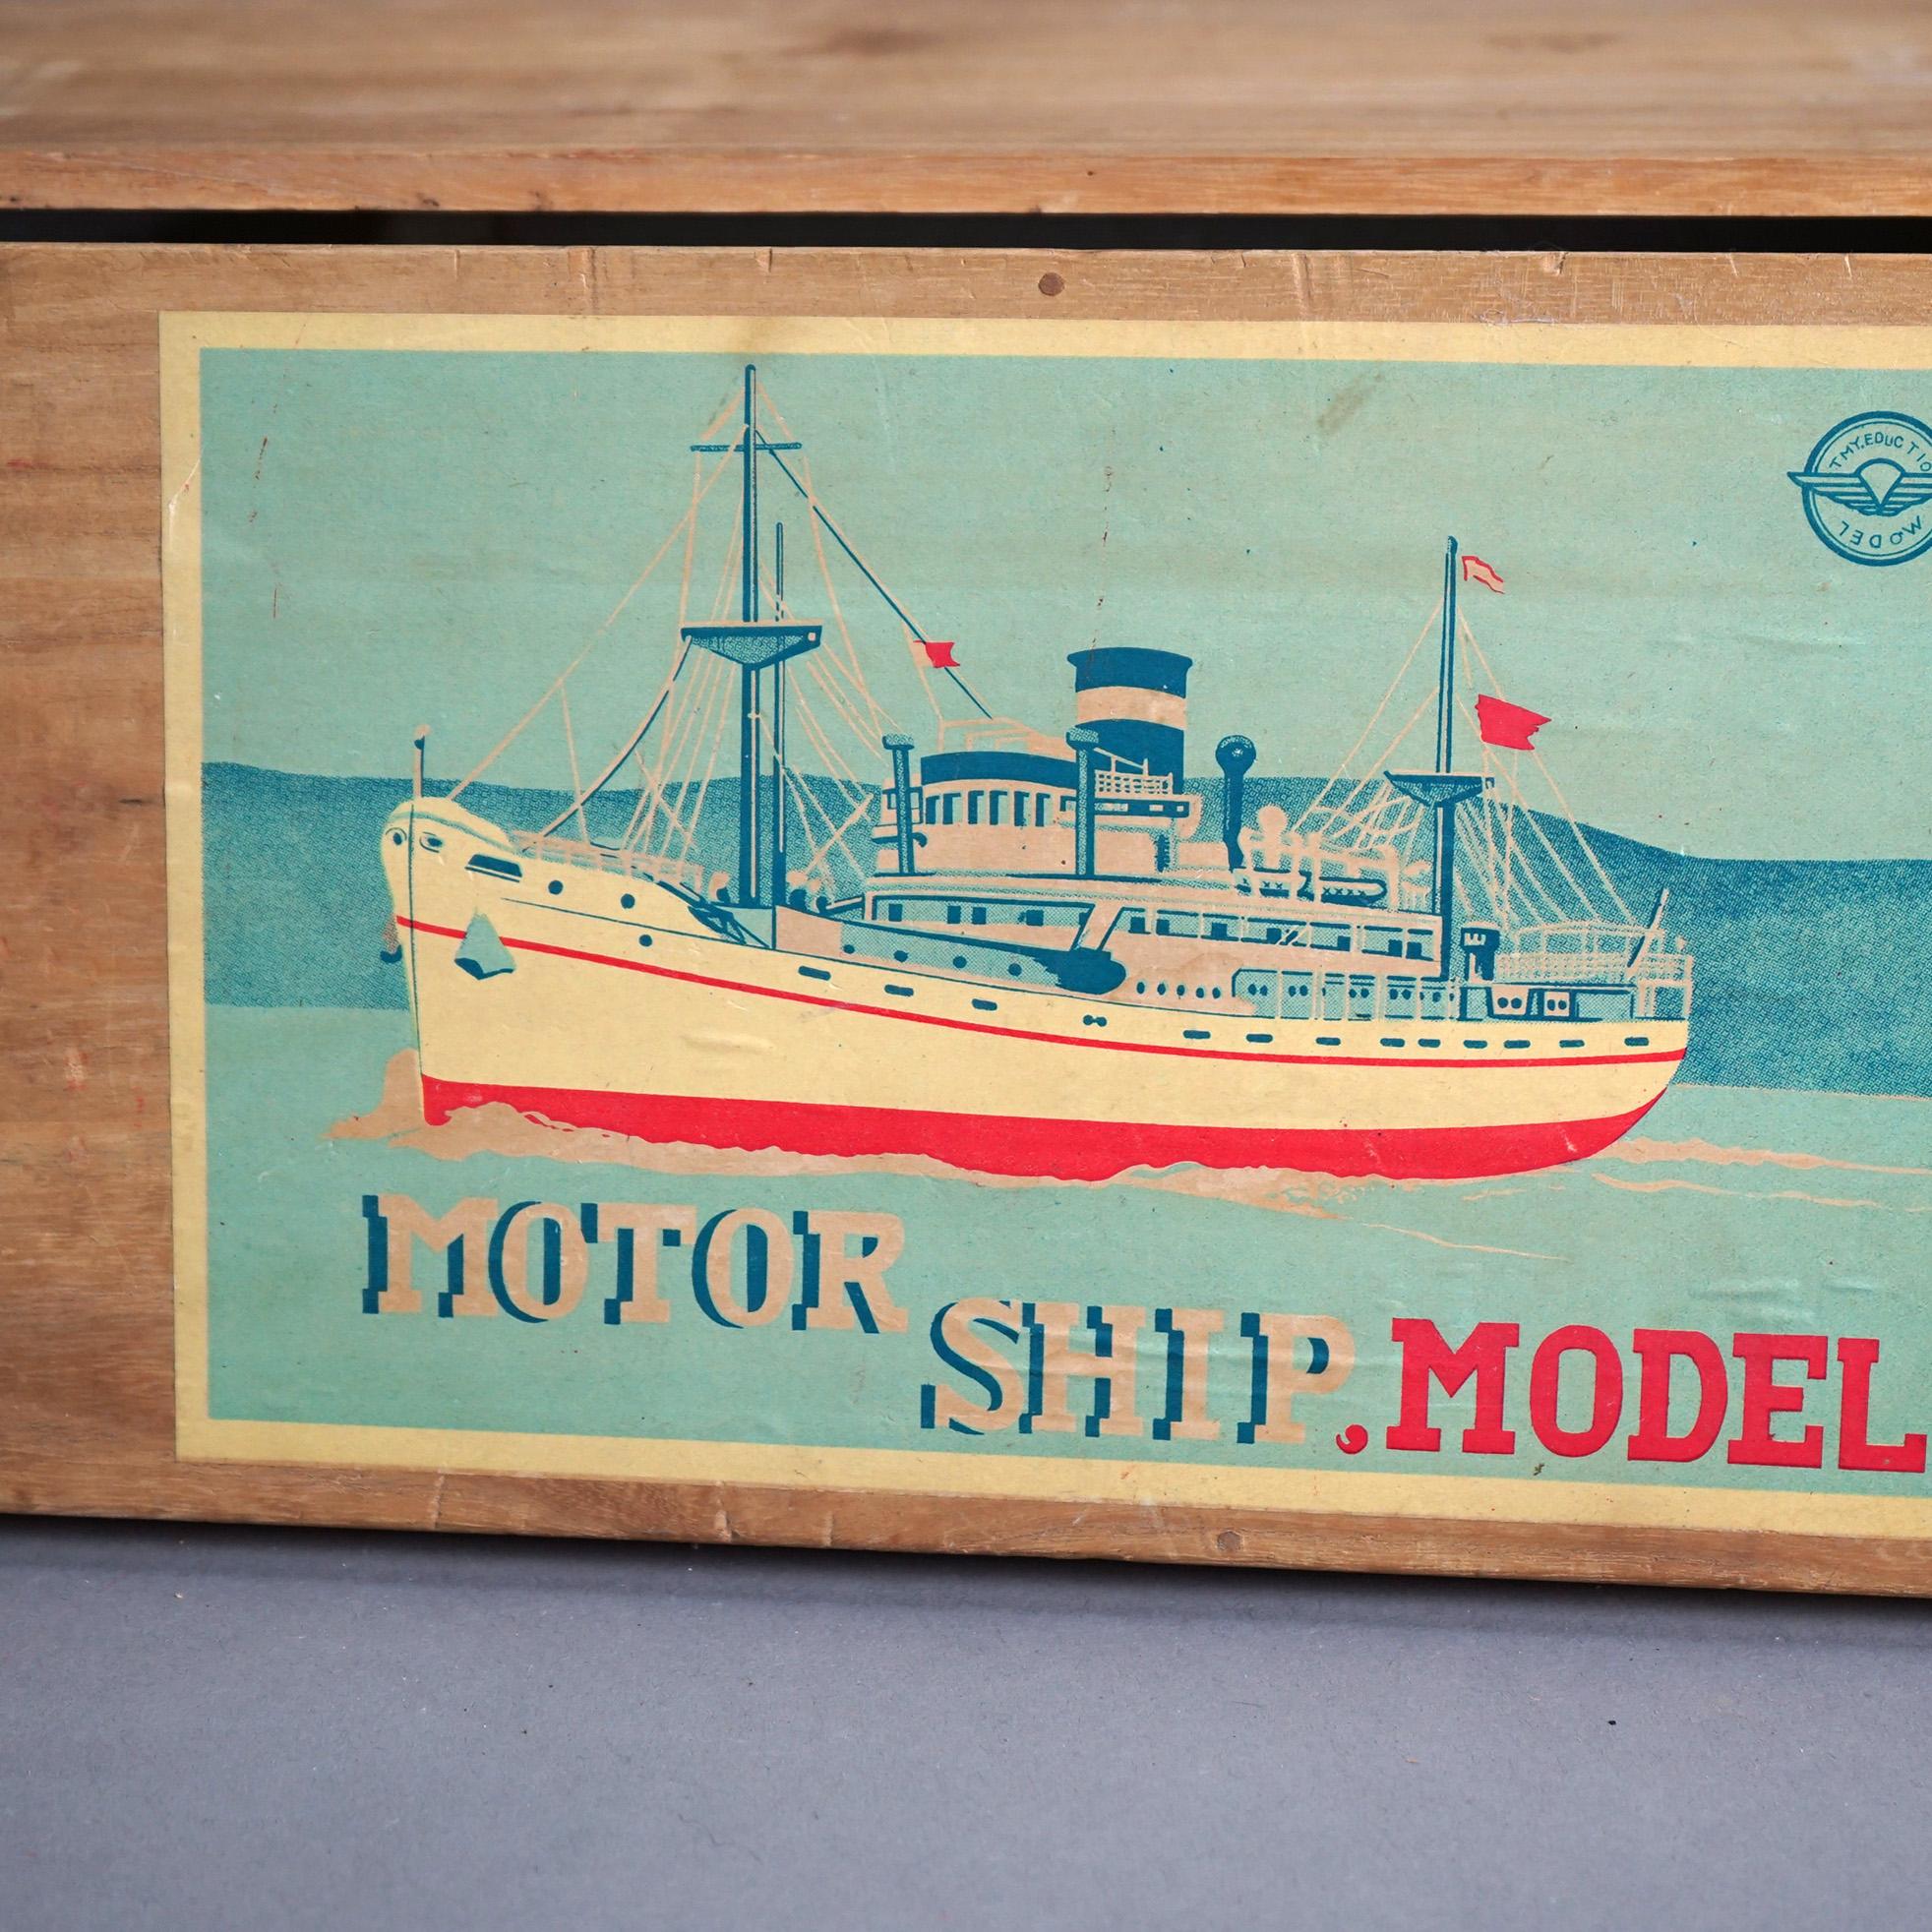 Vintage Polychrome Wooden Toy Motor Ship Model & Original Wooden Box, Tokyo Towa Education Model, c1940

Measures - box 8.75